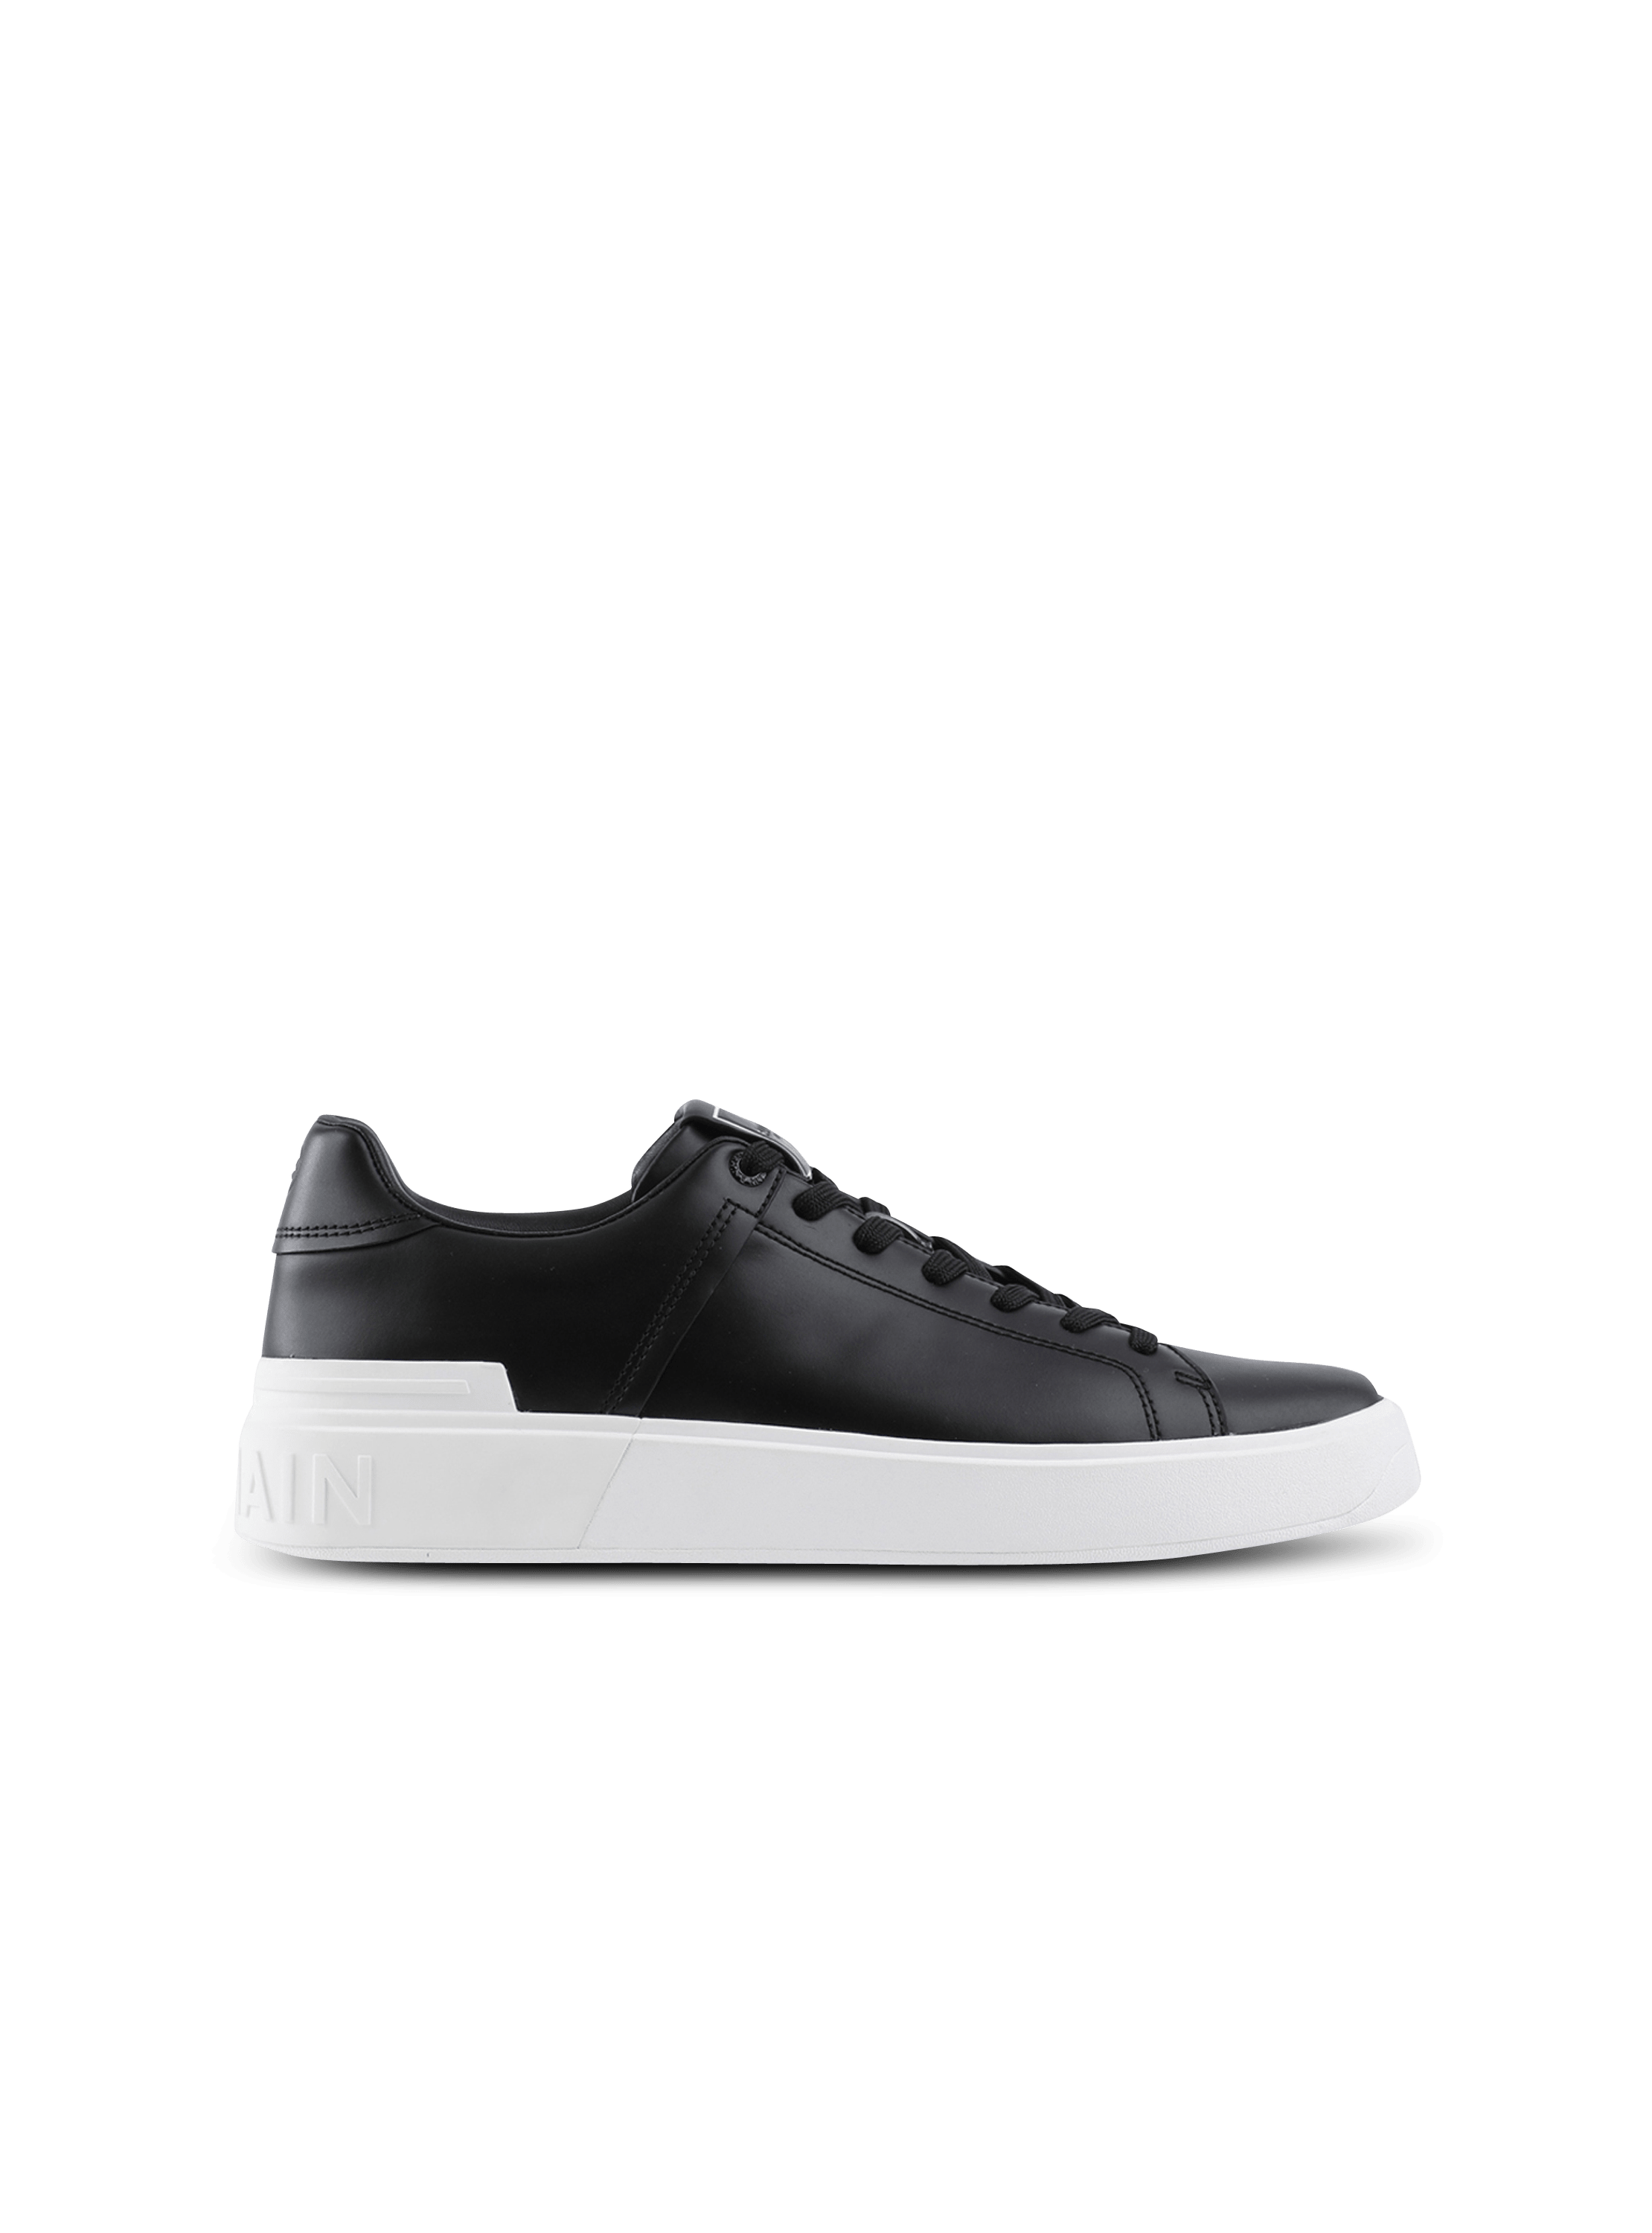 Sneakers B-Court aus Kalbsleder, schwarz, hi-res